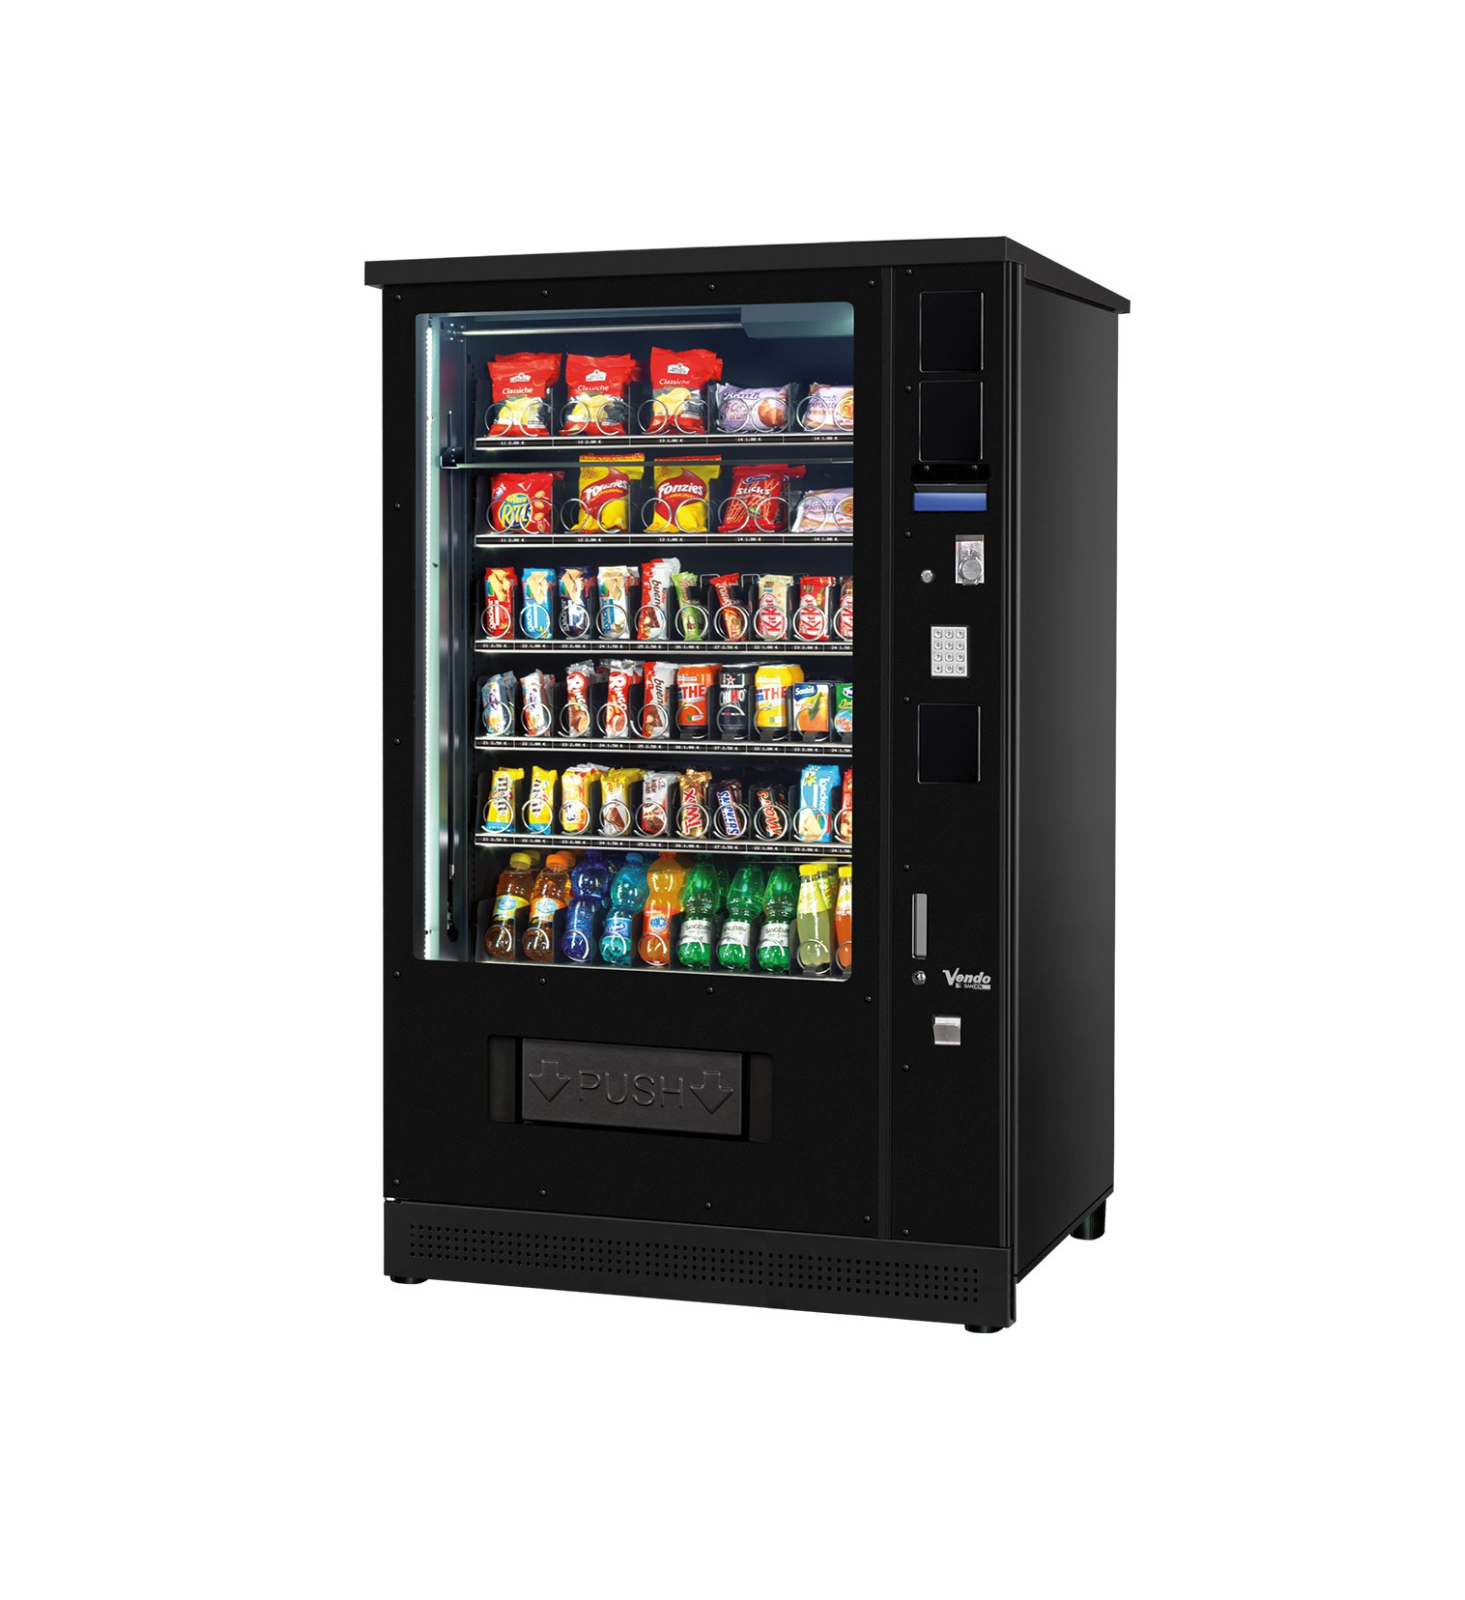 Sanden Vendo G-Snack 10 Outdoorautomat Warenautomat Verkaufsautomat Getränkeautomat Snackautomat